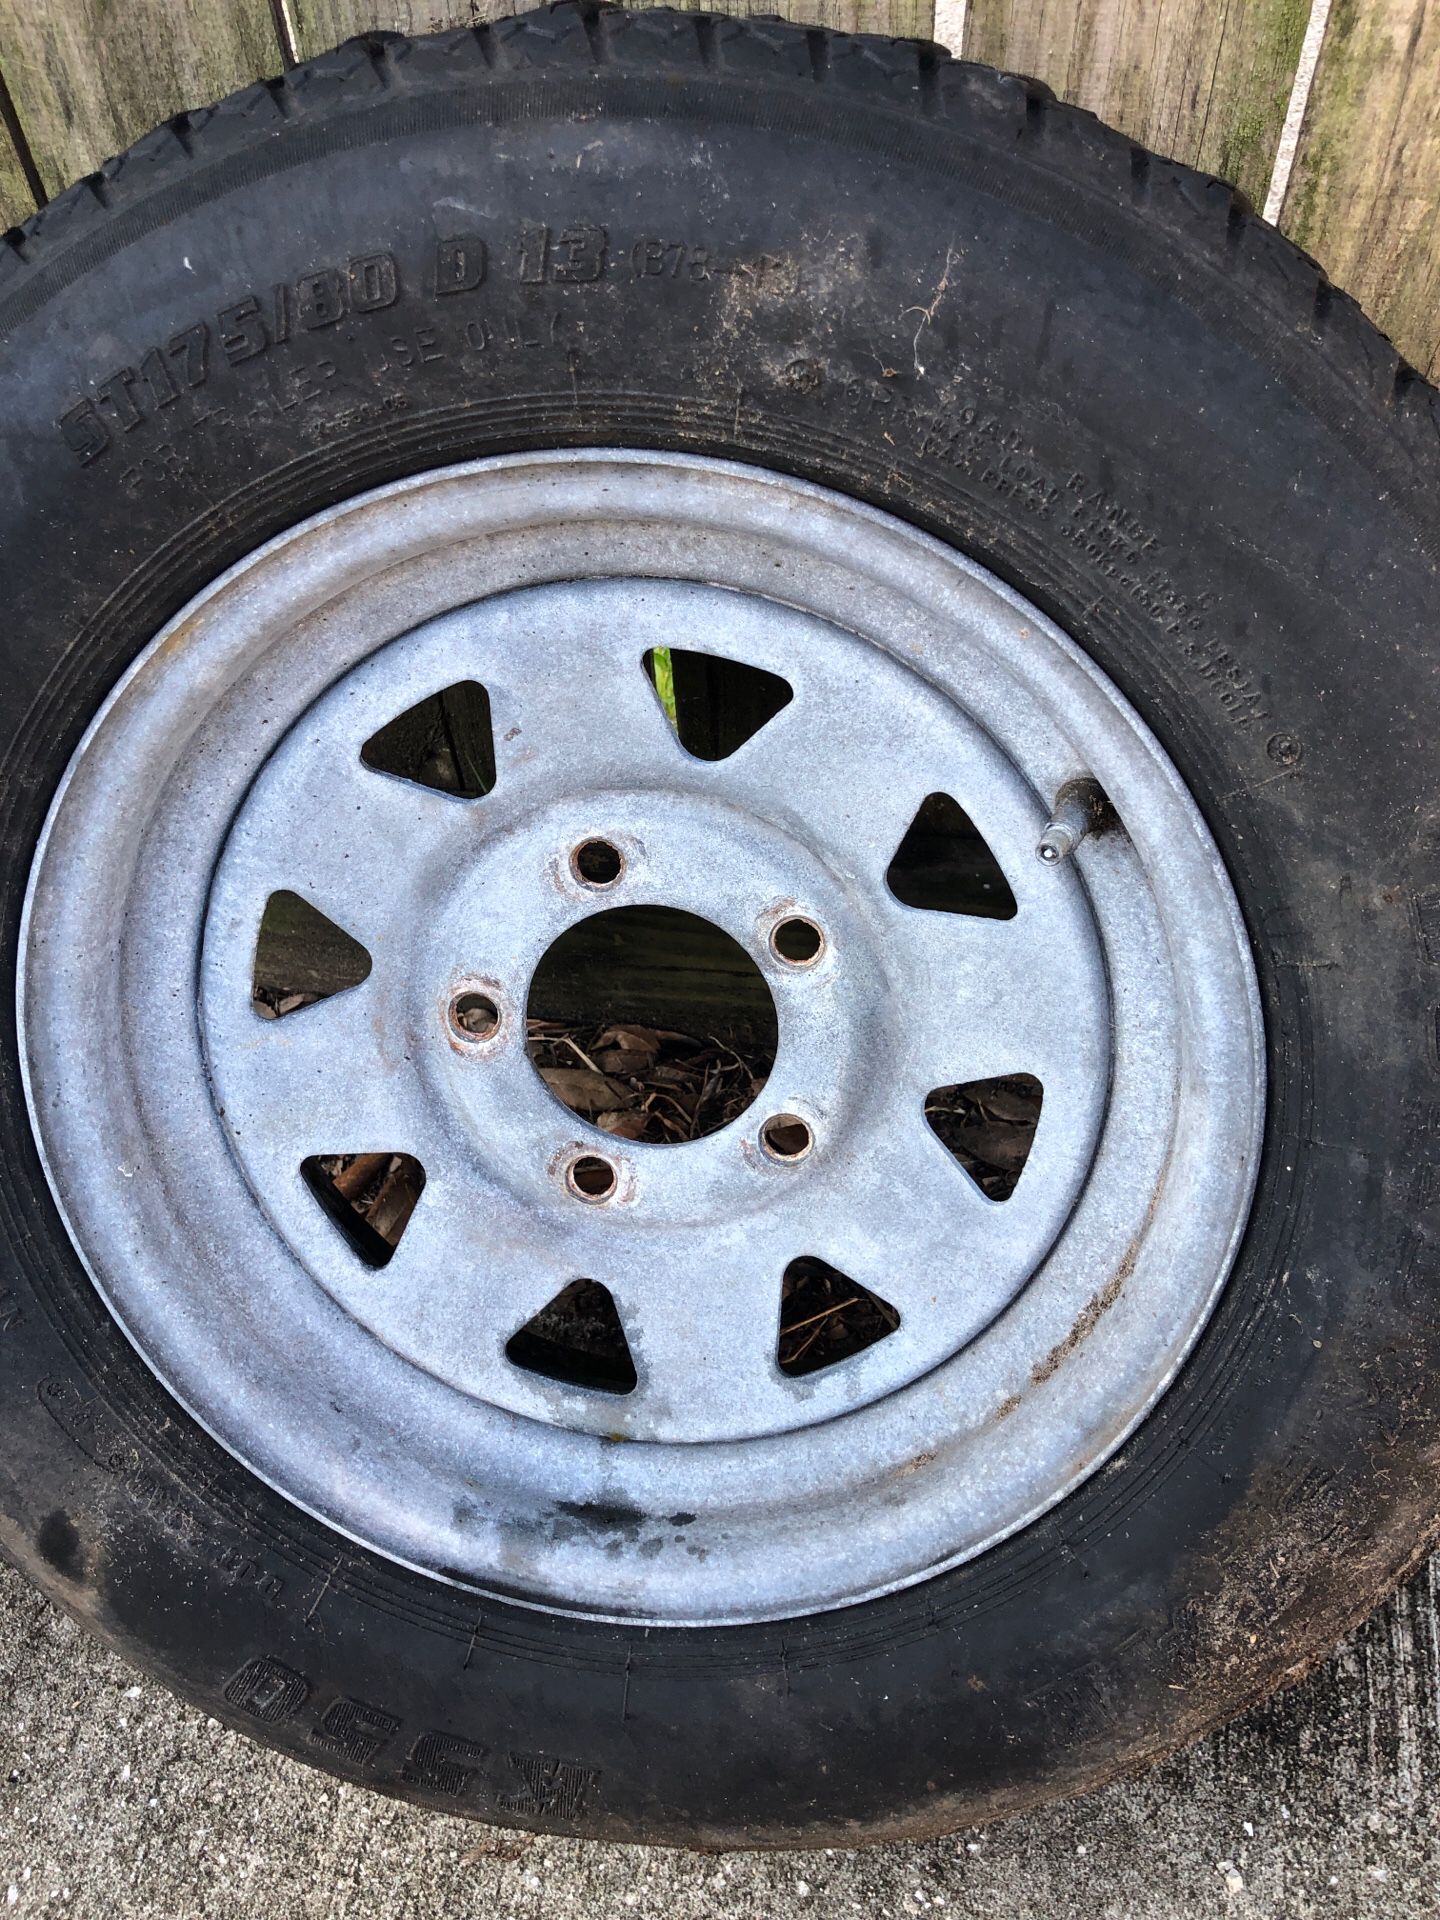 Utility trailer tire rim size 13